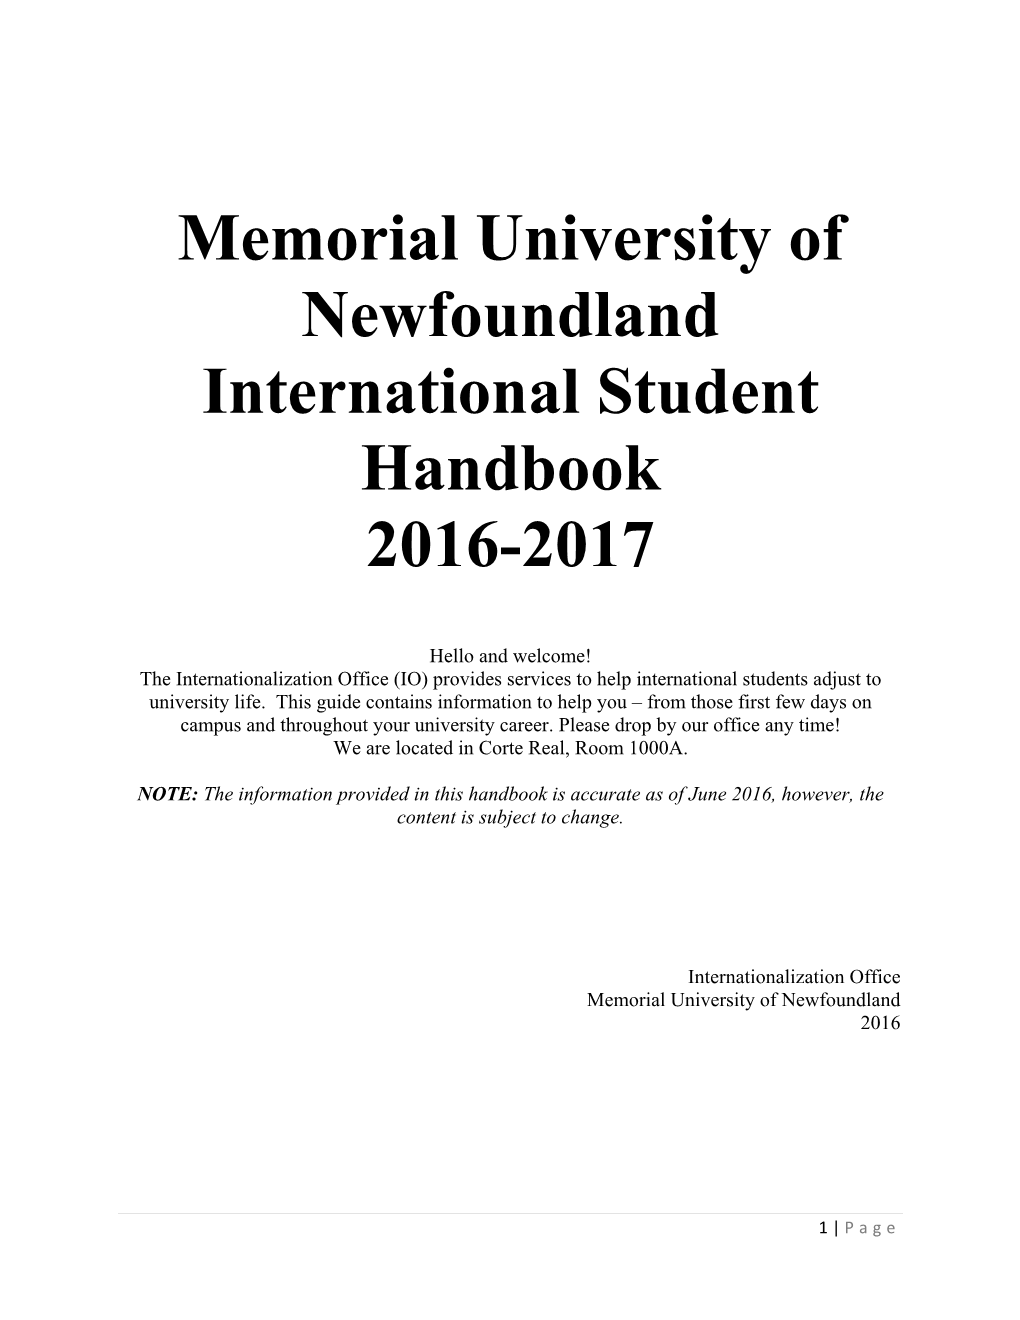 Memorial University of Newfoundland International Student Handbook 2016-2017